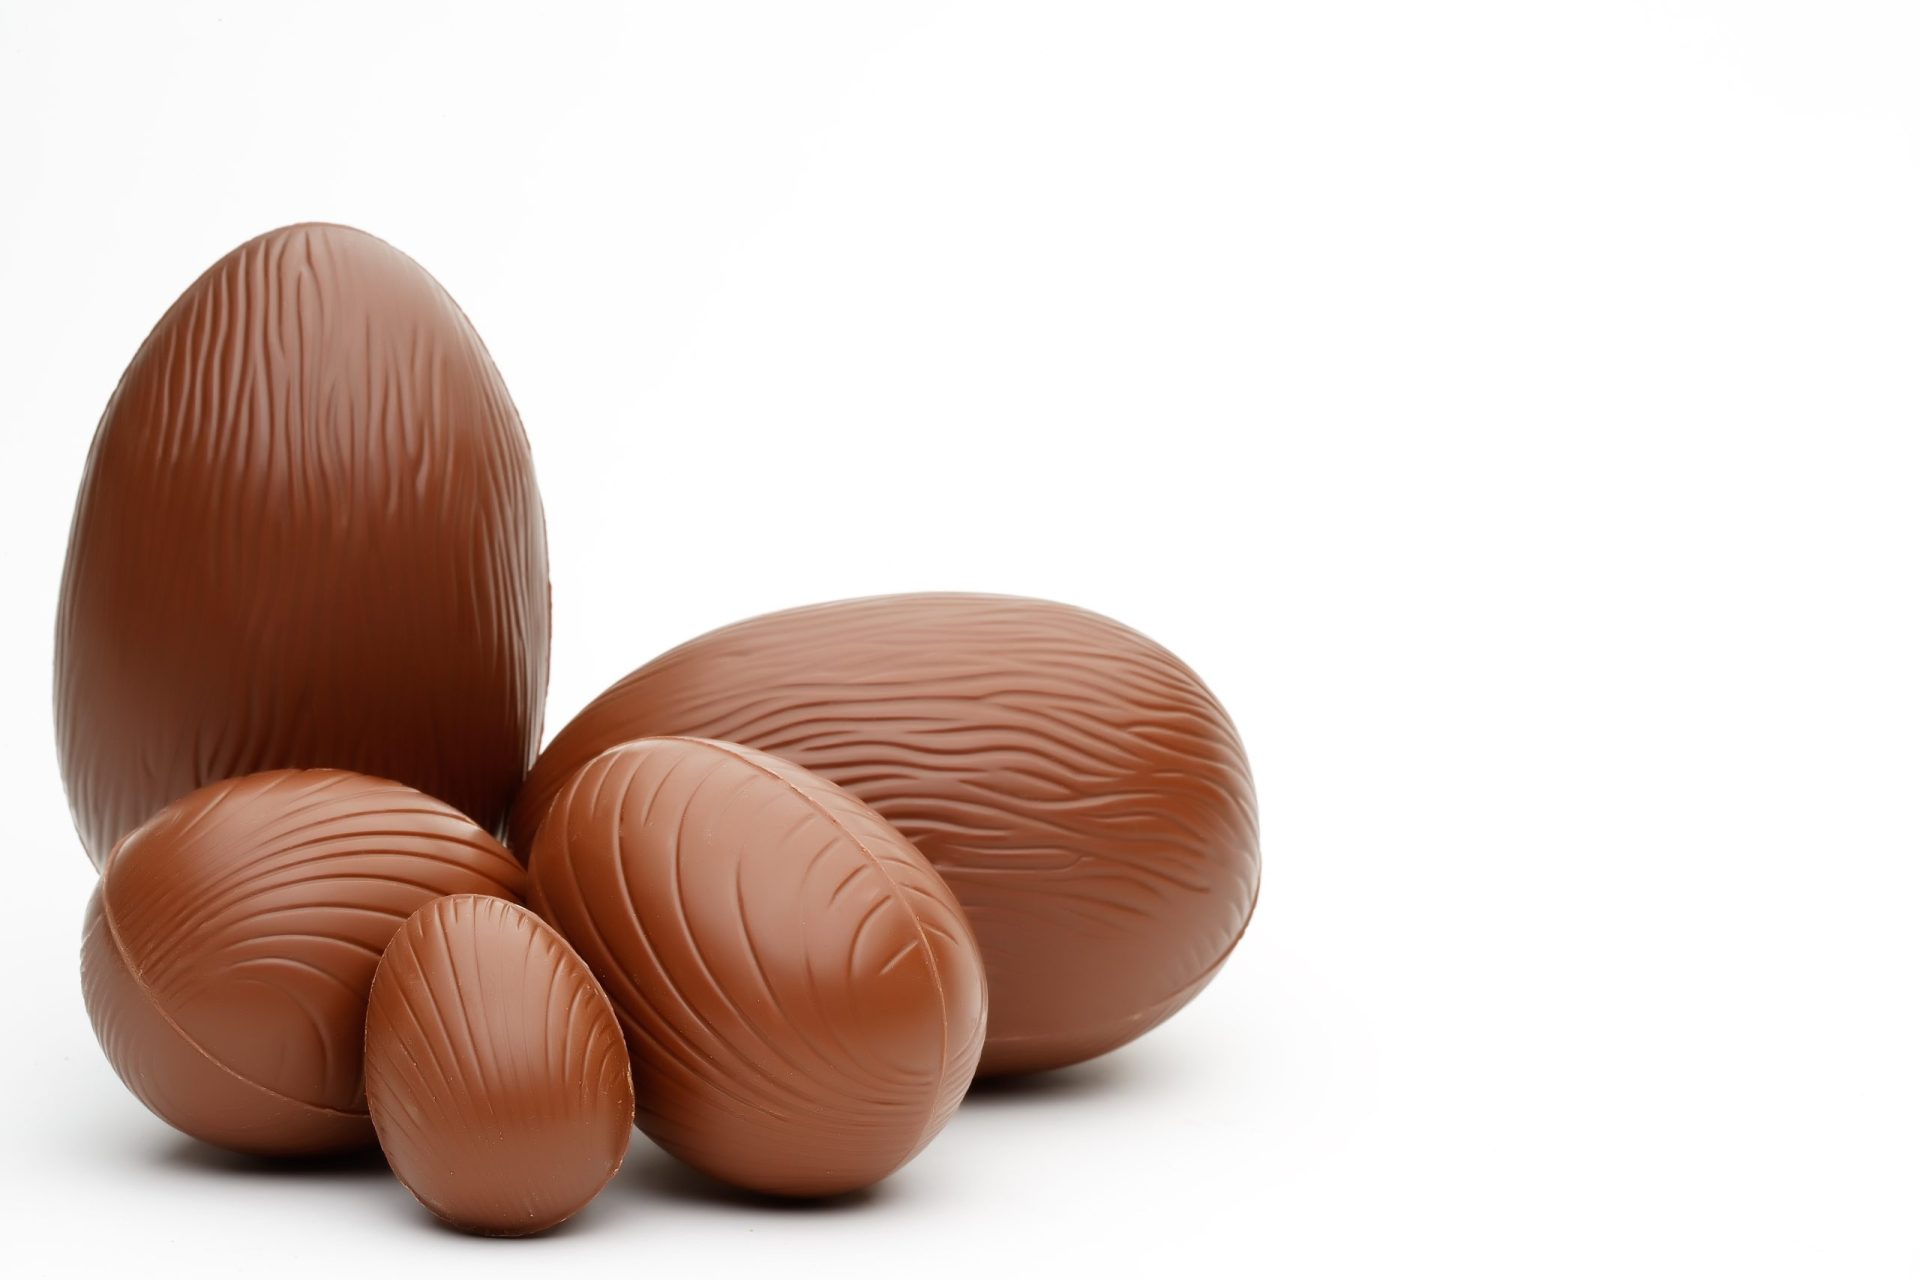 Inglaterra. Homem rouba 200 mil ovos de chocolate